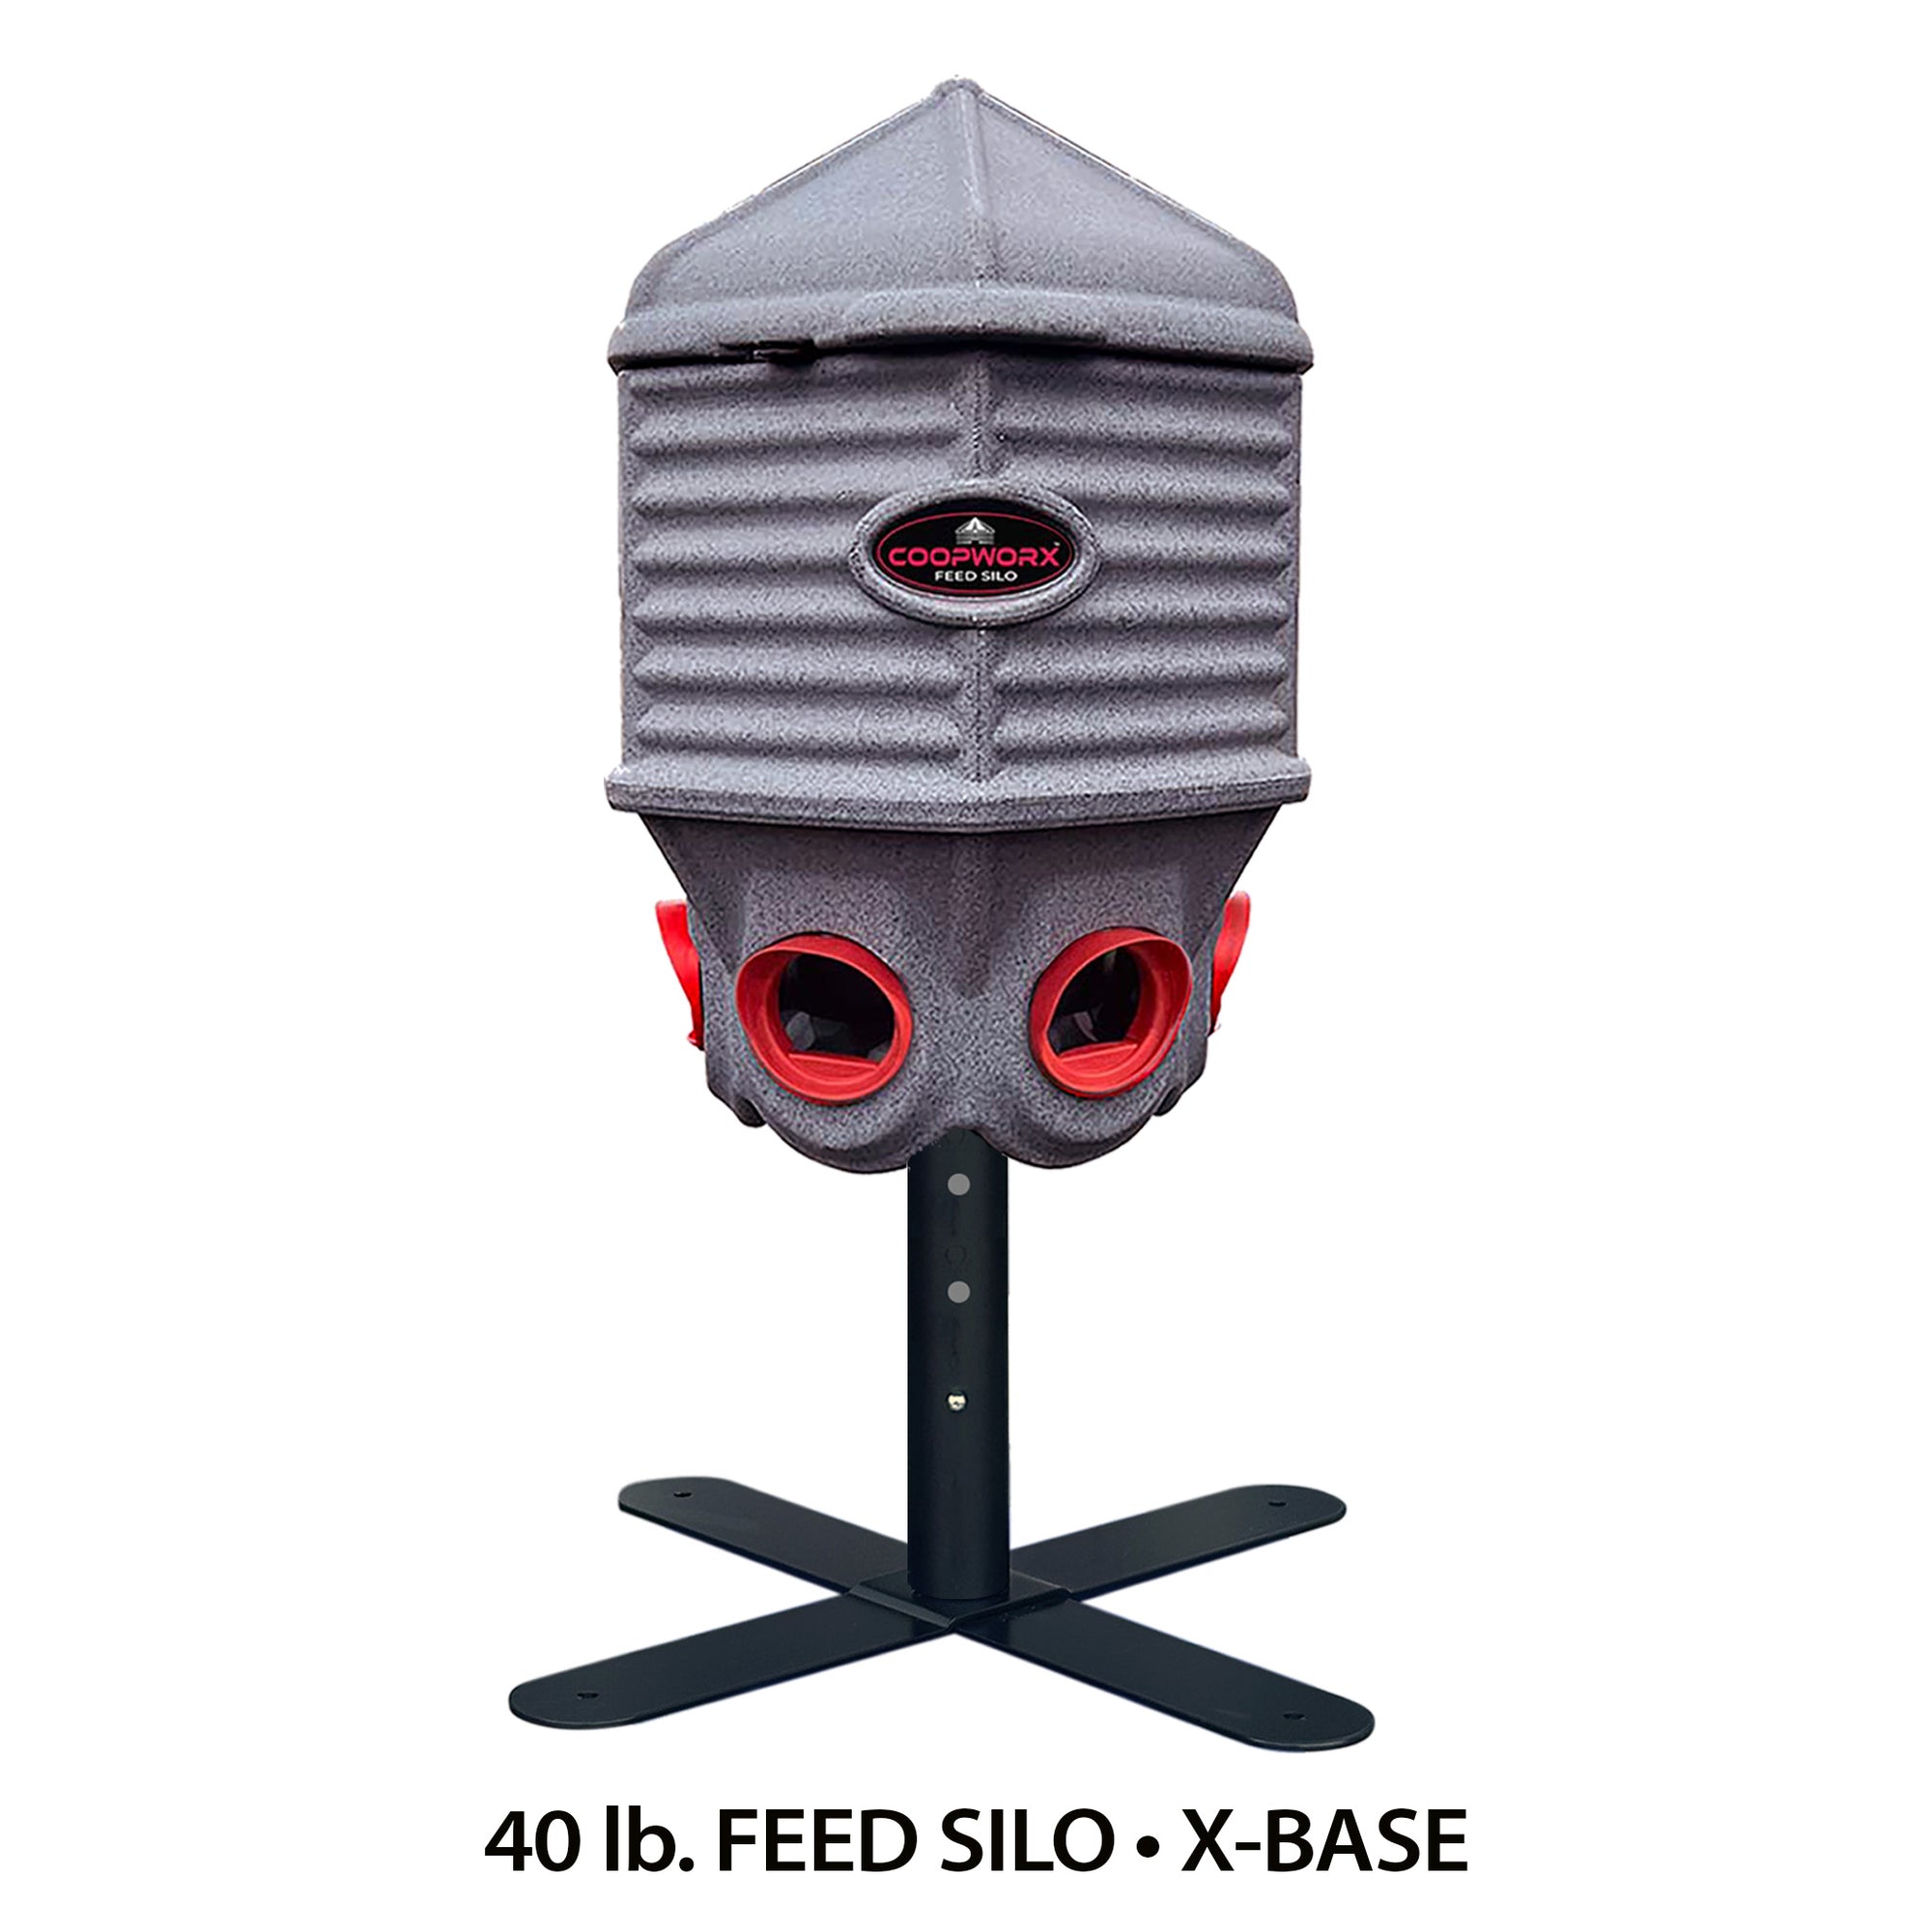 CoopWorx Feed Silo II (40 lb.) X-Base